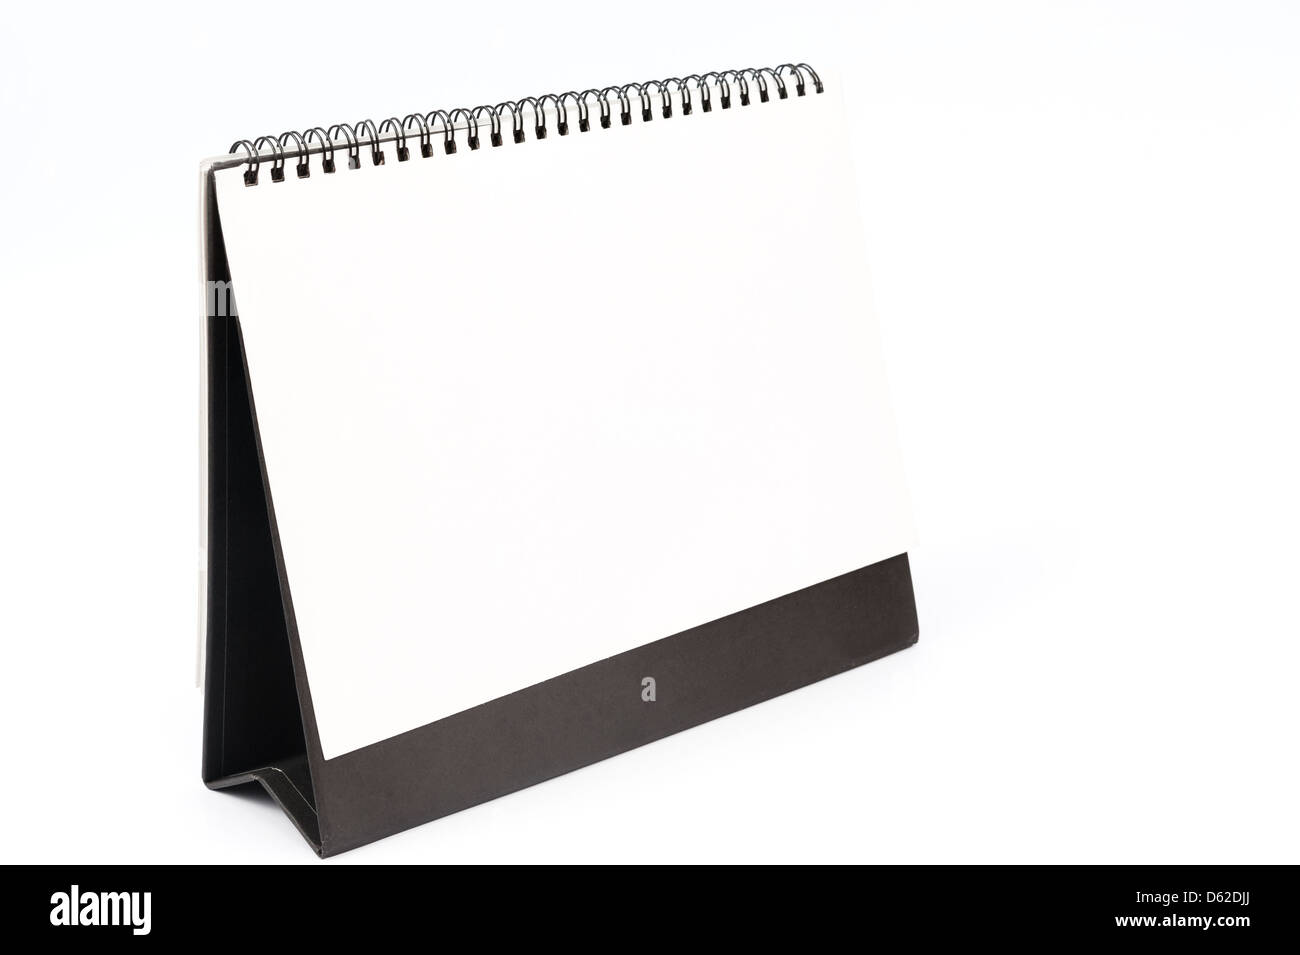 Blank desktop calendar isolated on white background Stock Photo